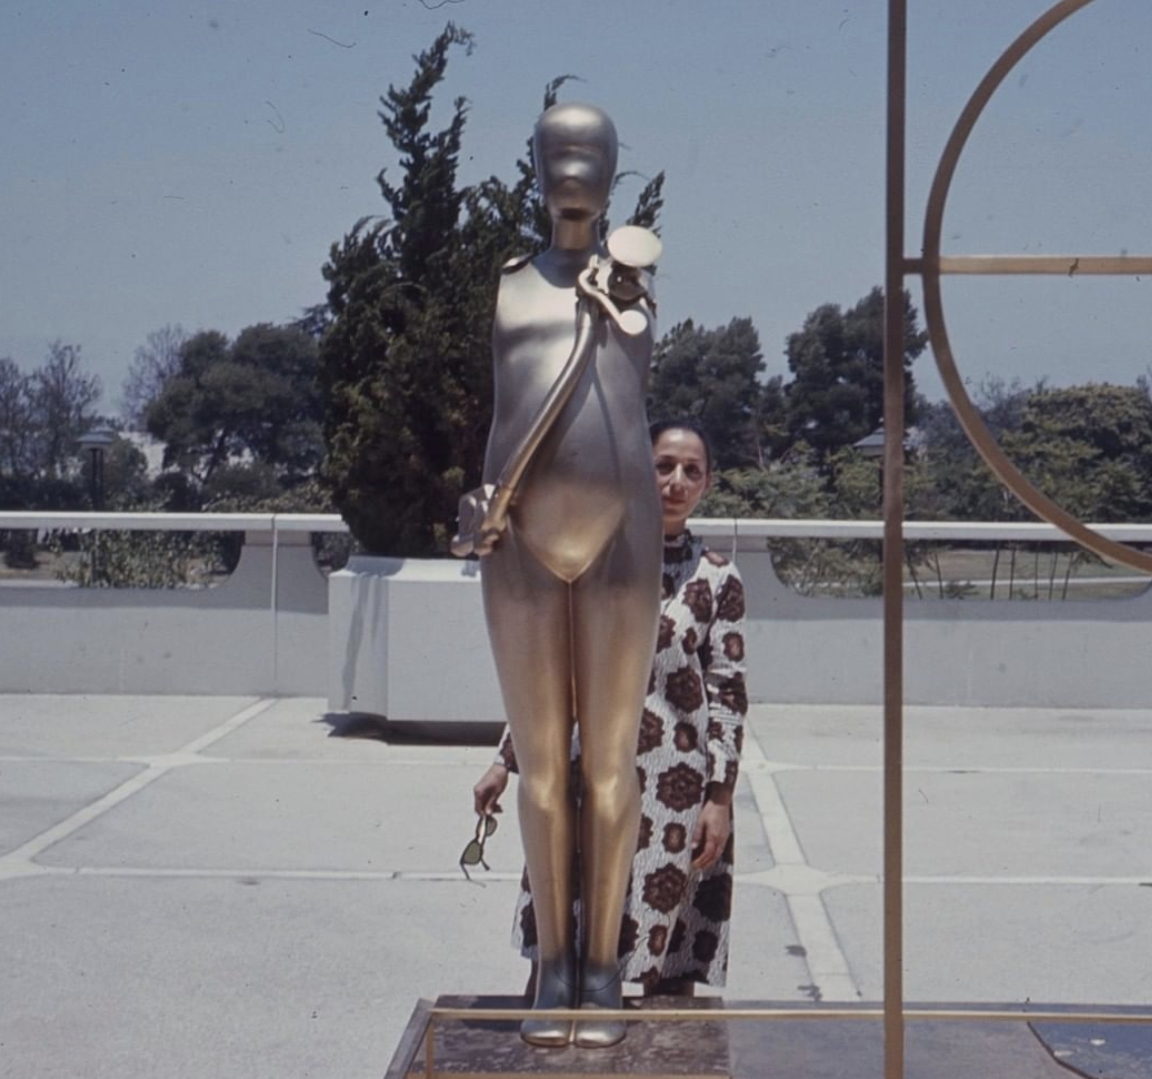 Image: Luchita Hurtado on a visit to LACMA in 1967, photo courtesy of the Hurtado studio.